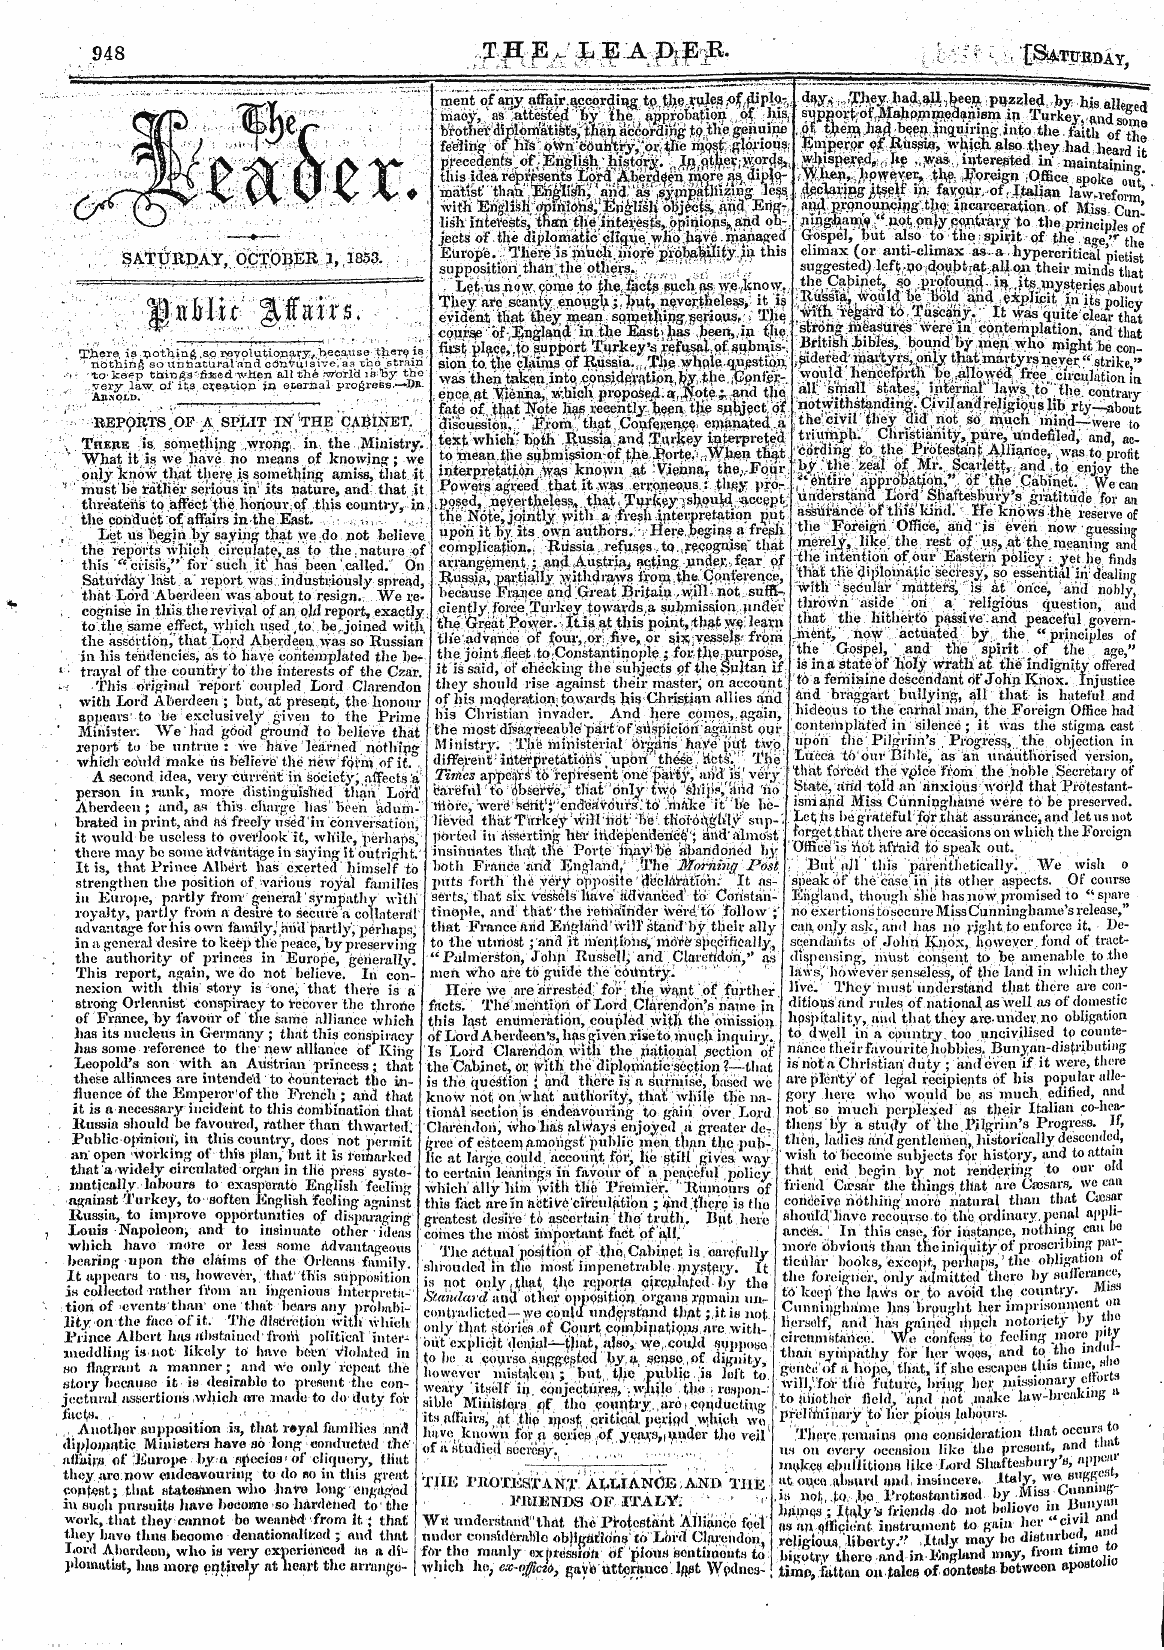 Leader (1850-1860): jS F Y, 2nd edition - Ar01203